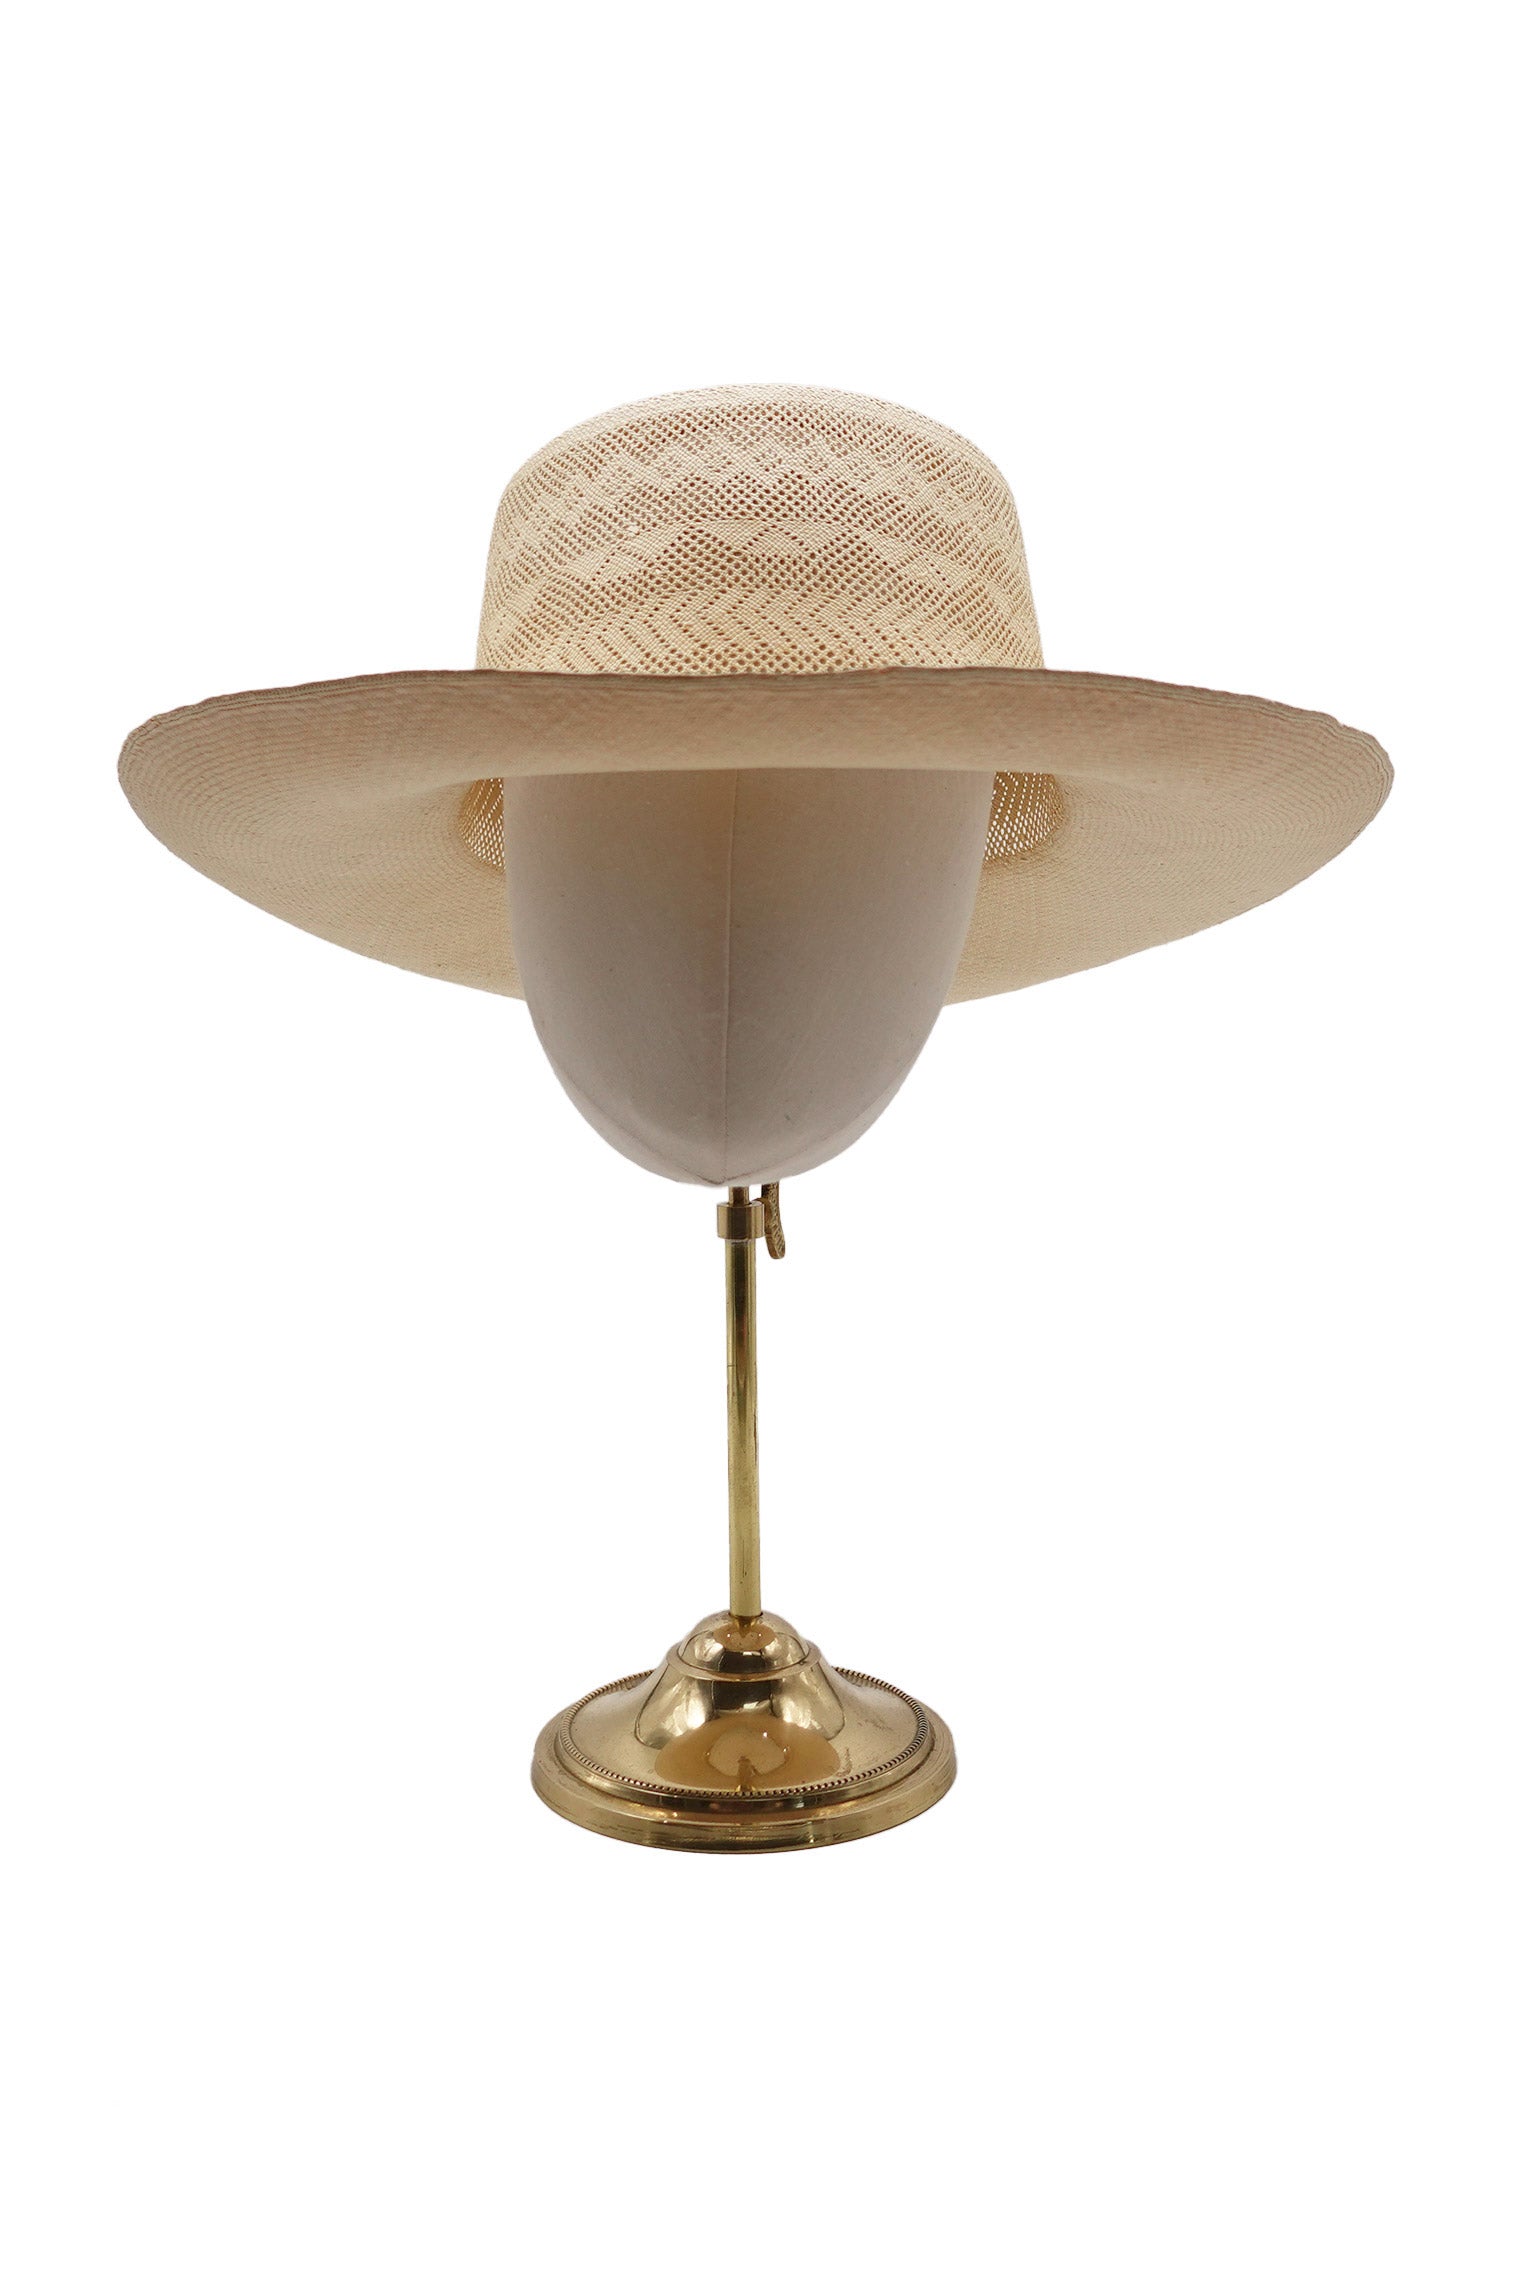 Grace  Woven Panama - The Bespoke Embroidered Panama Hat Collection - Lock & Co. Hatters London UK